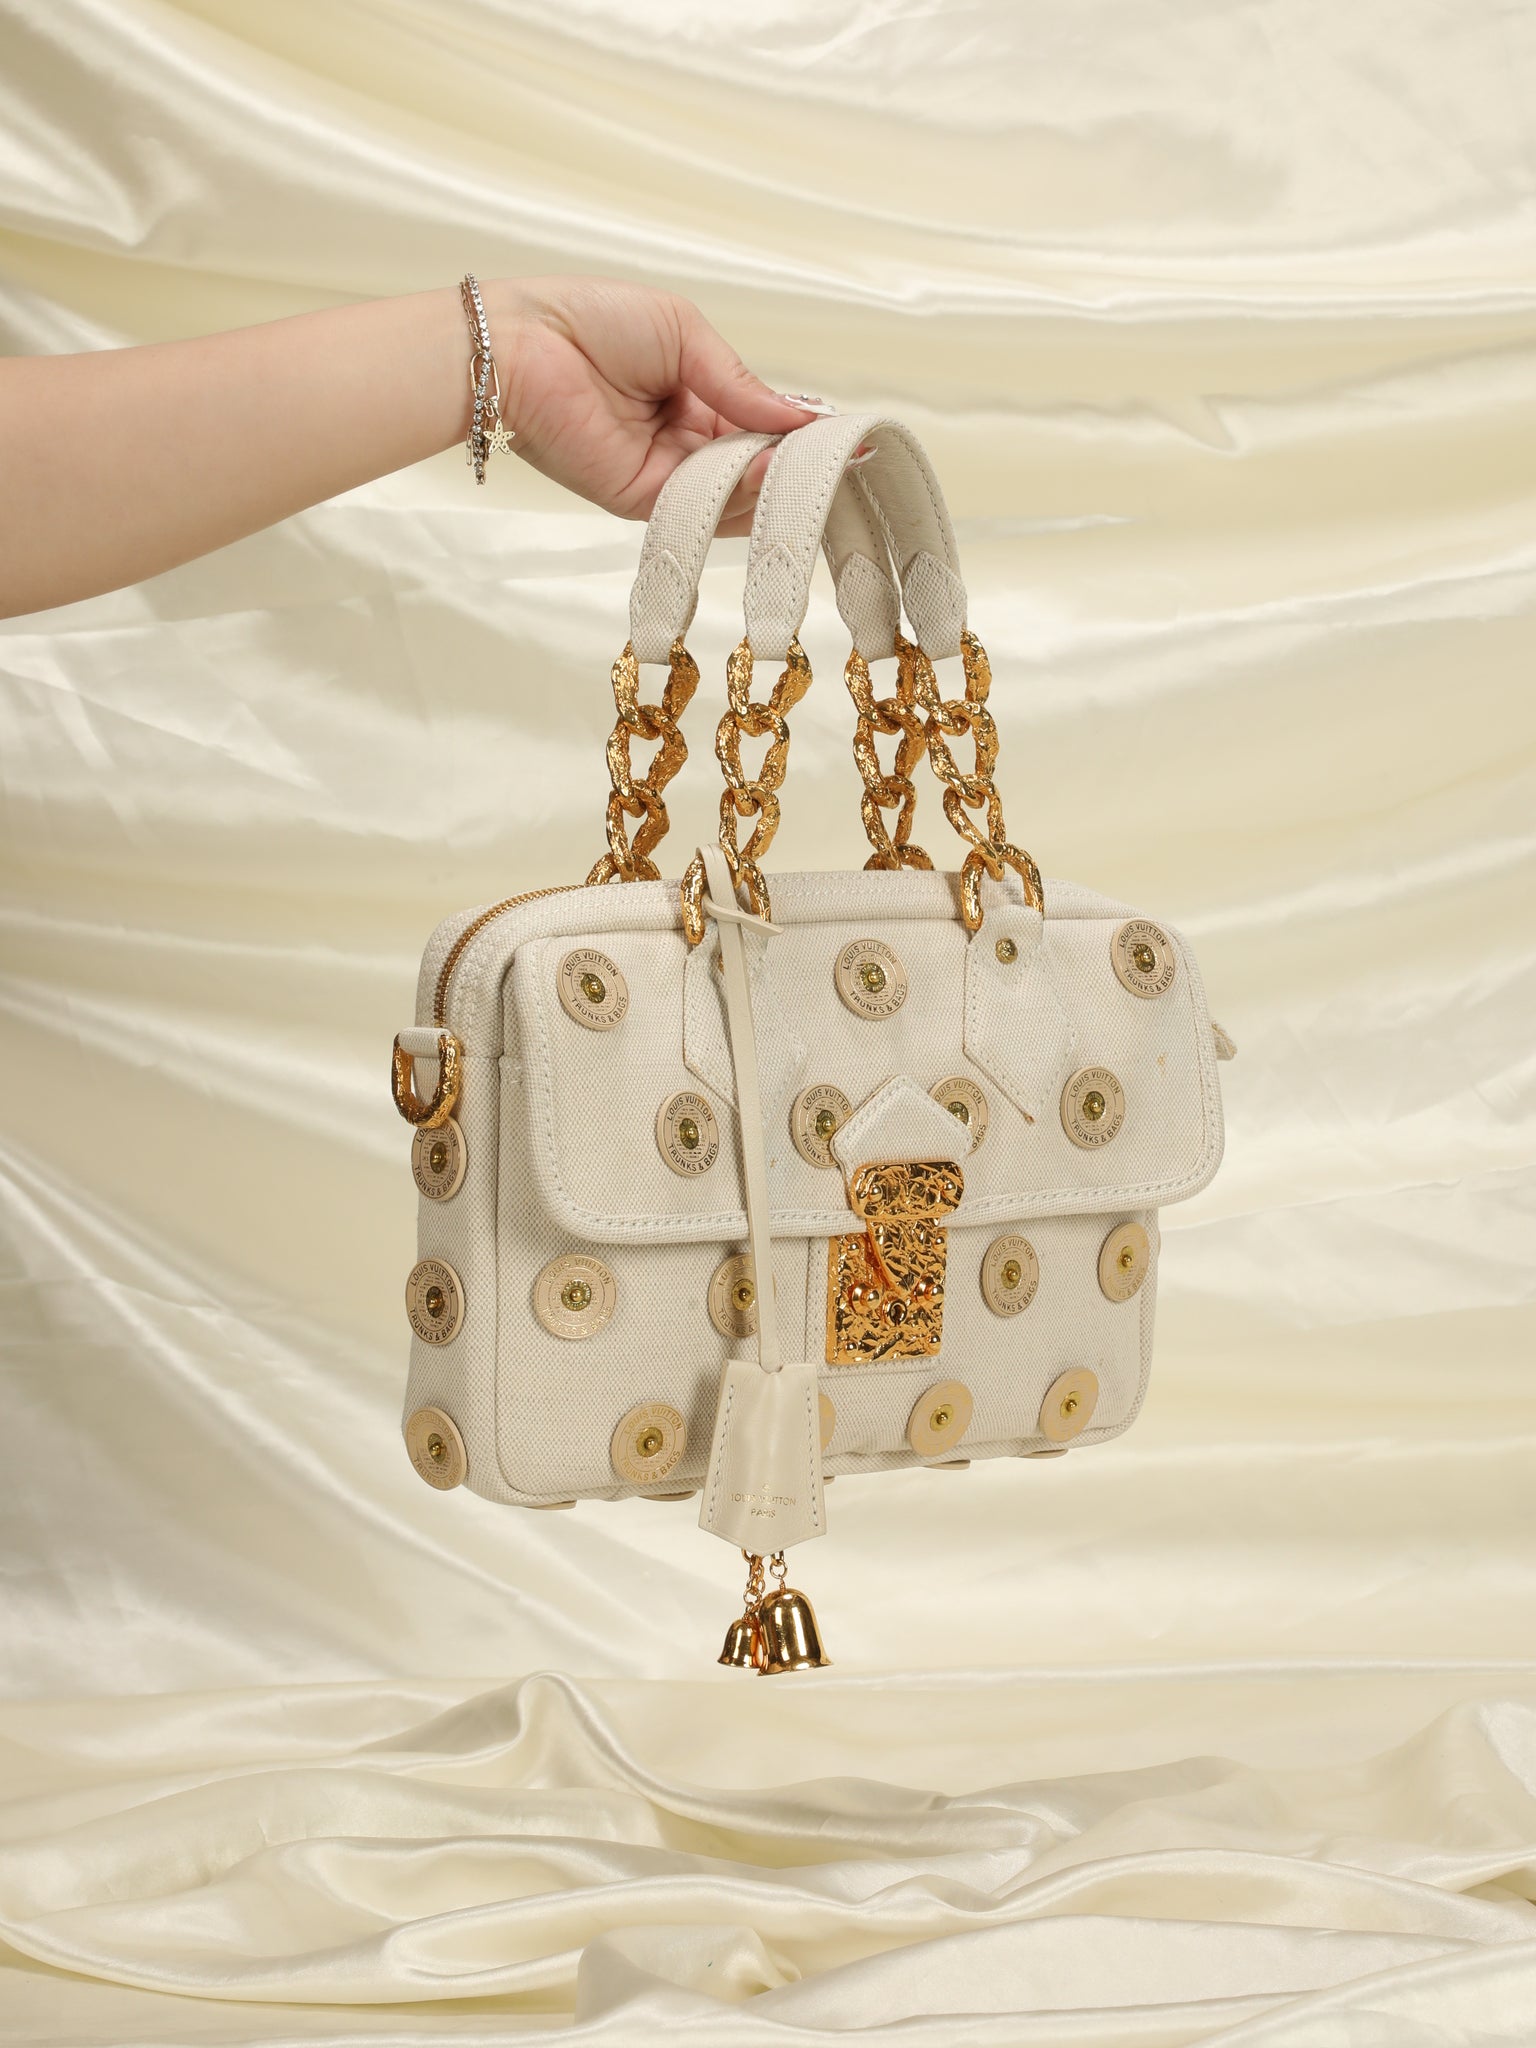 Authentic LOUIS VUITTON Bag Purse for Sale in Panama City